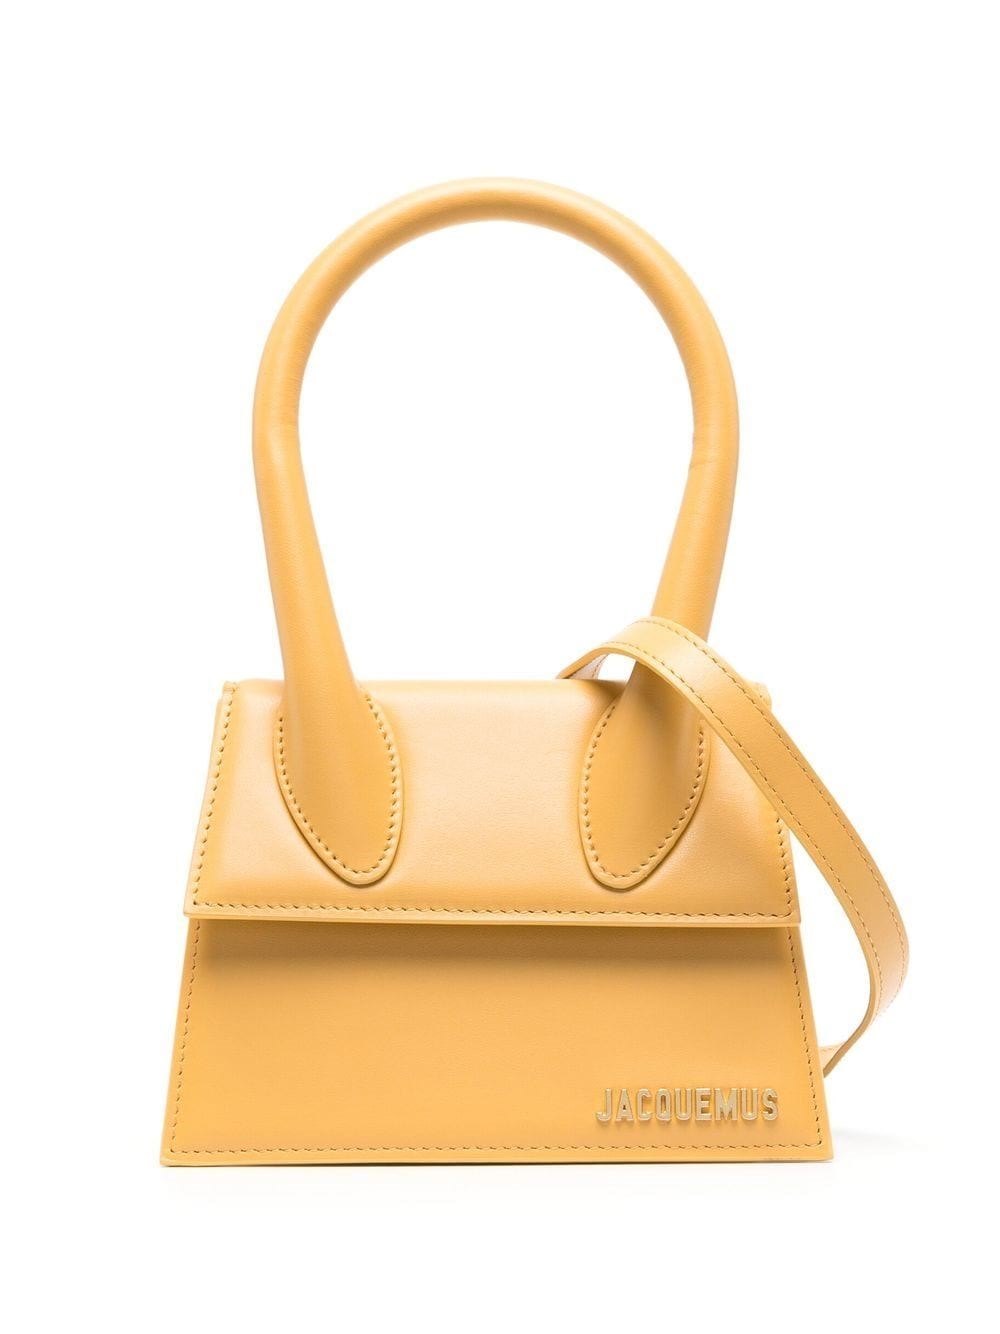 Jacquemus "le Chiquito Moyen" Bag In Yellow